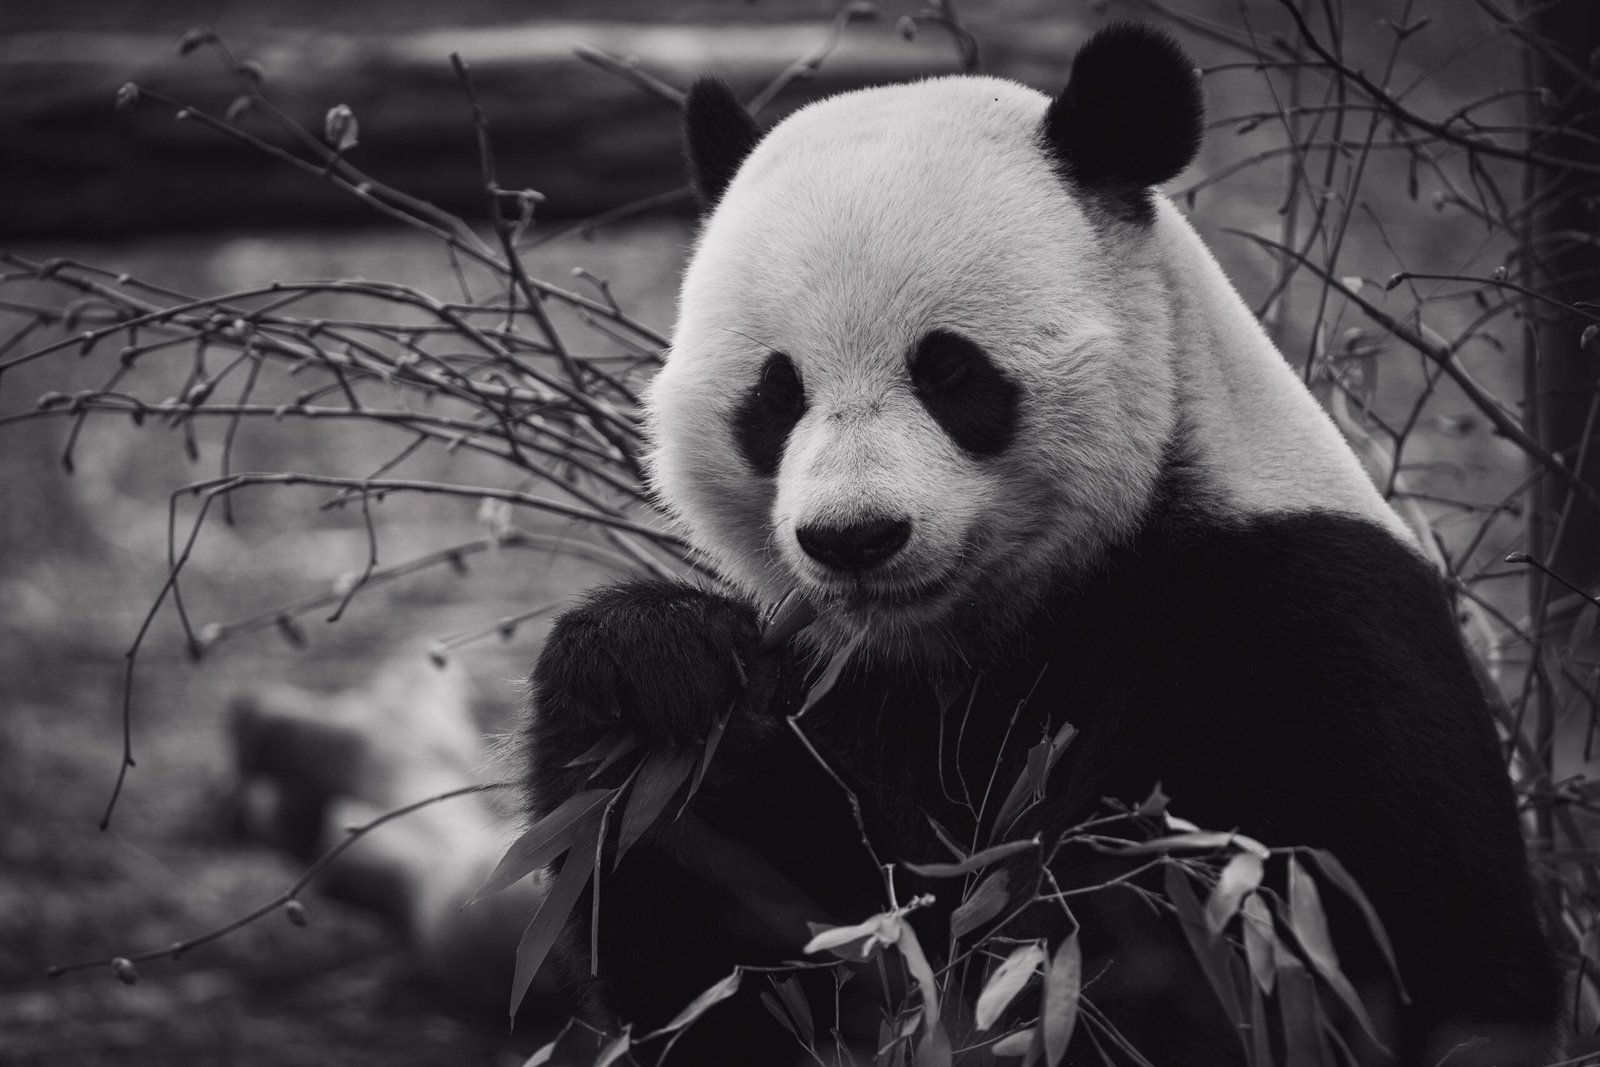 A photograph of a panda eating